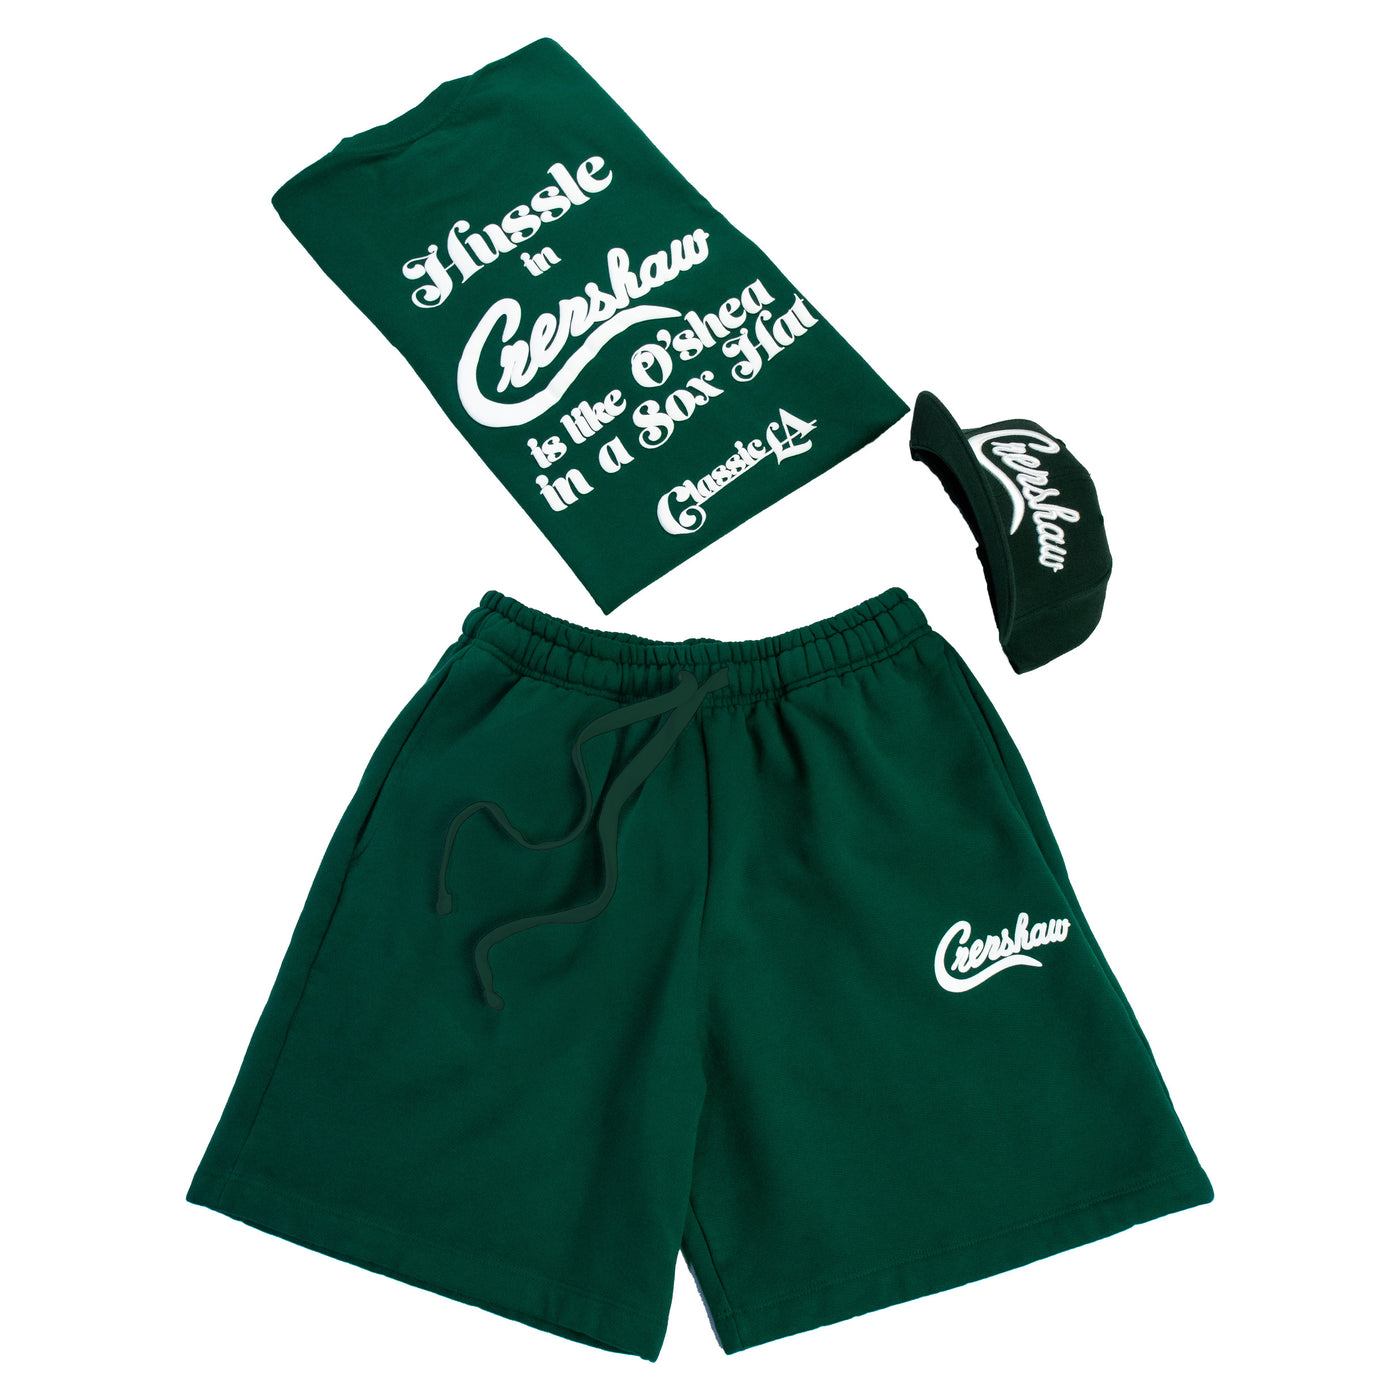 Crenshaw Classic LA Shorts - Green/White - Matching Set